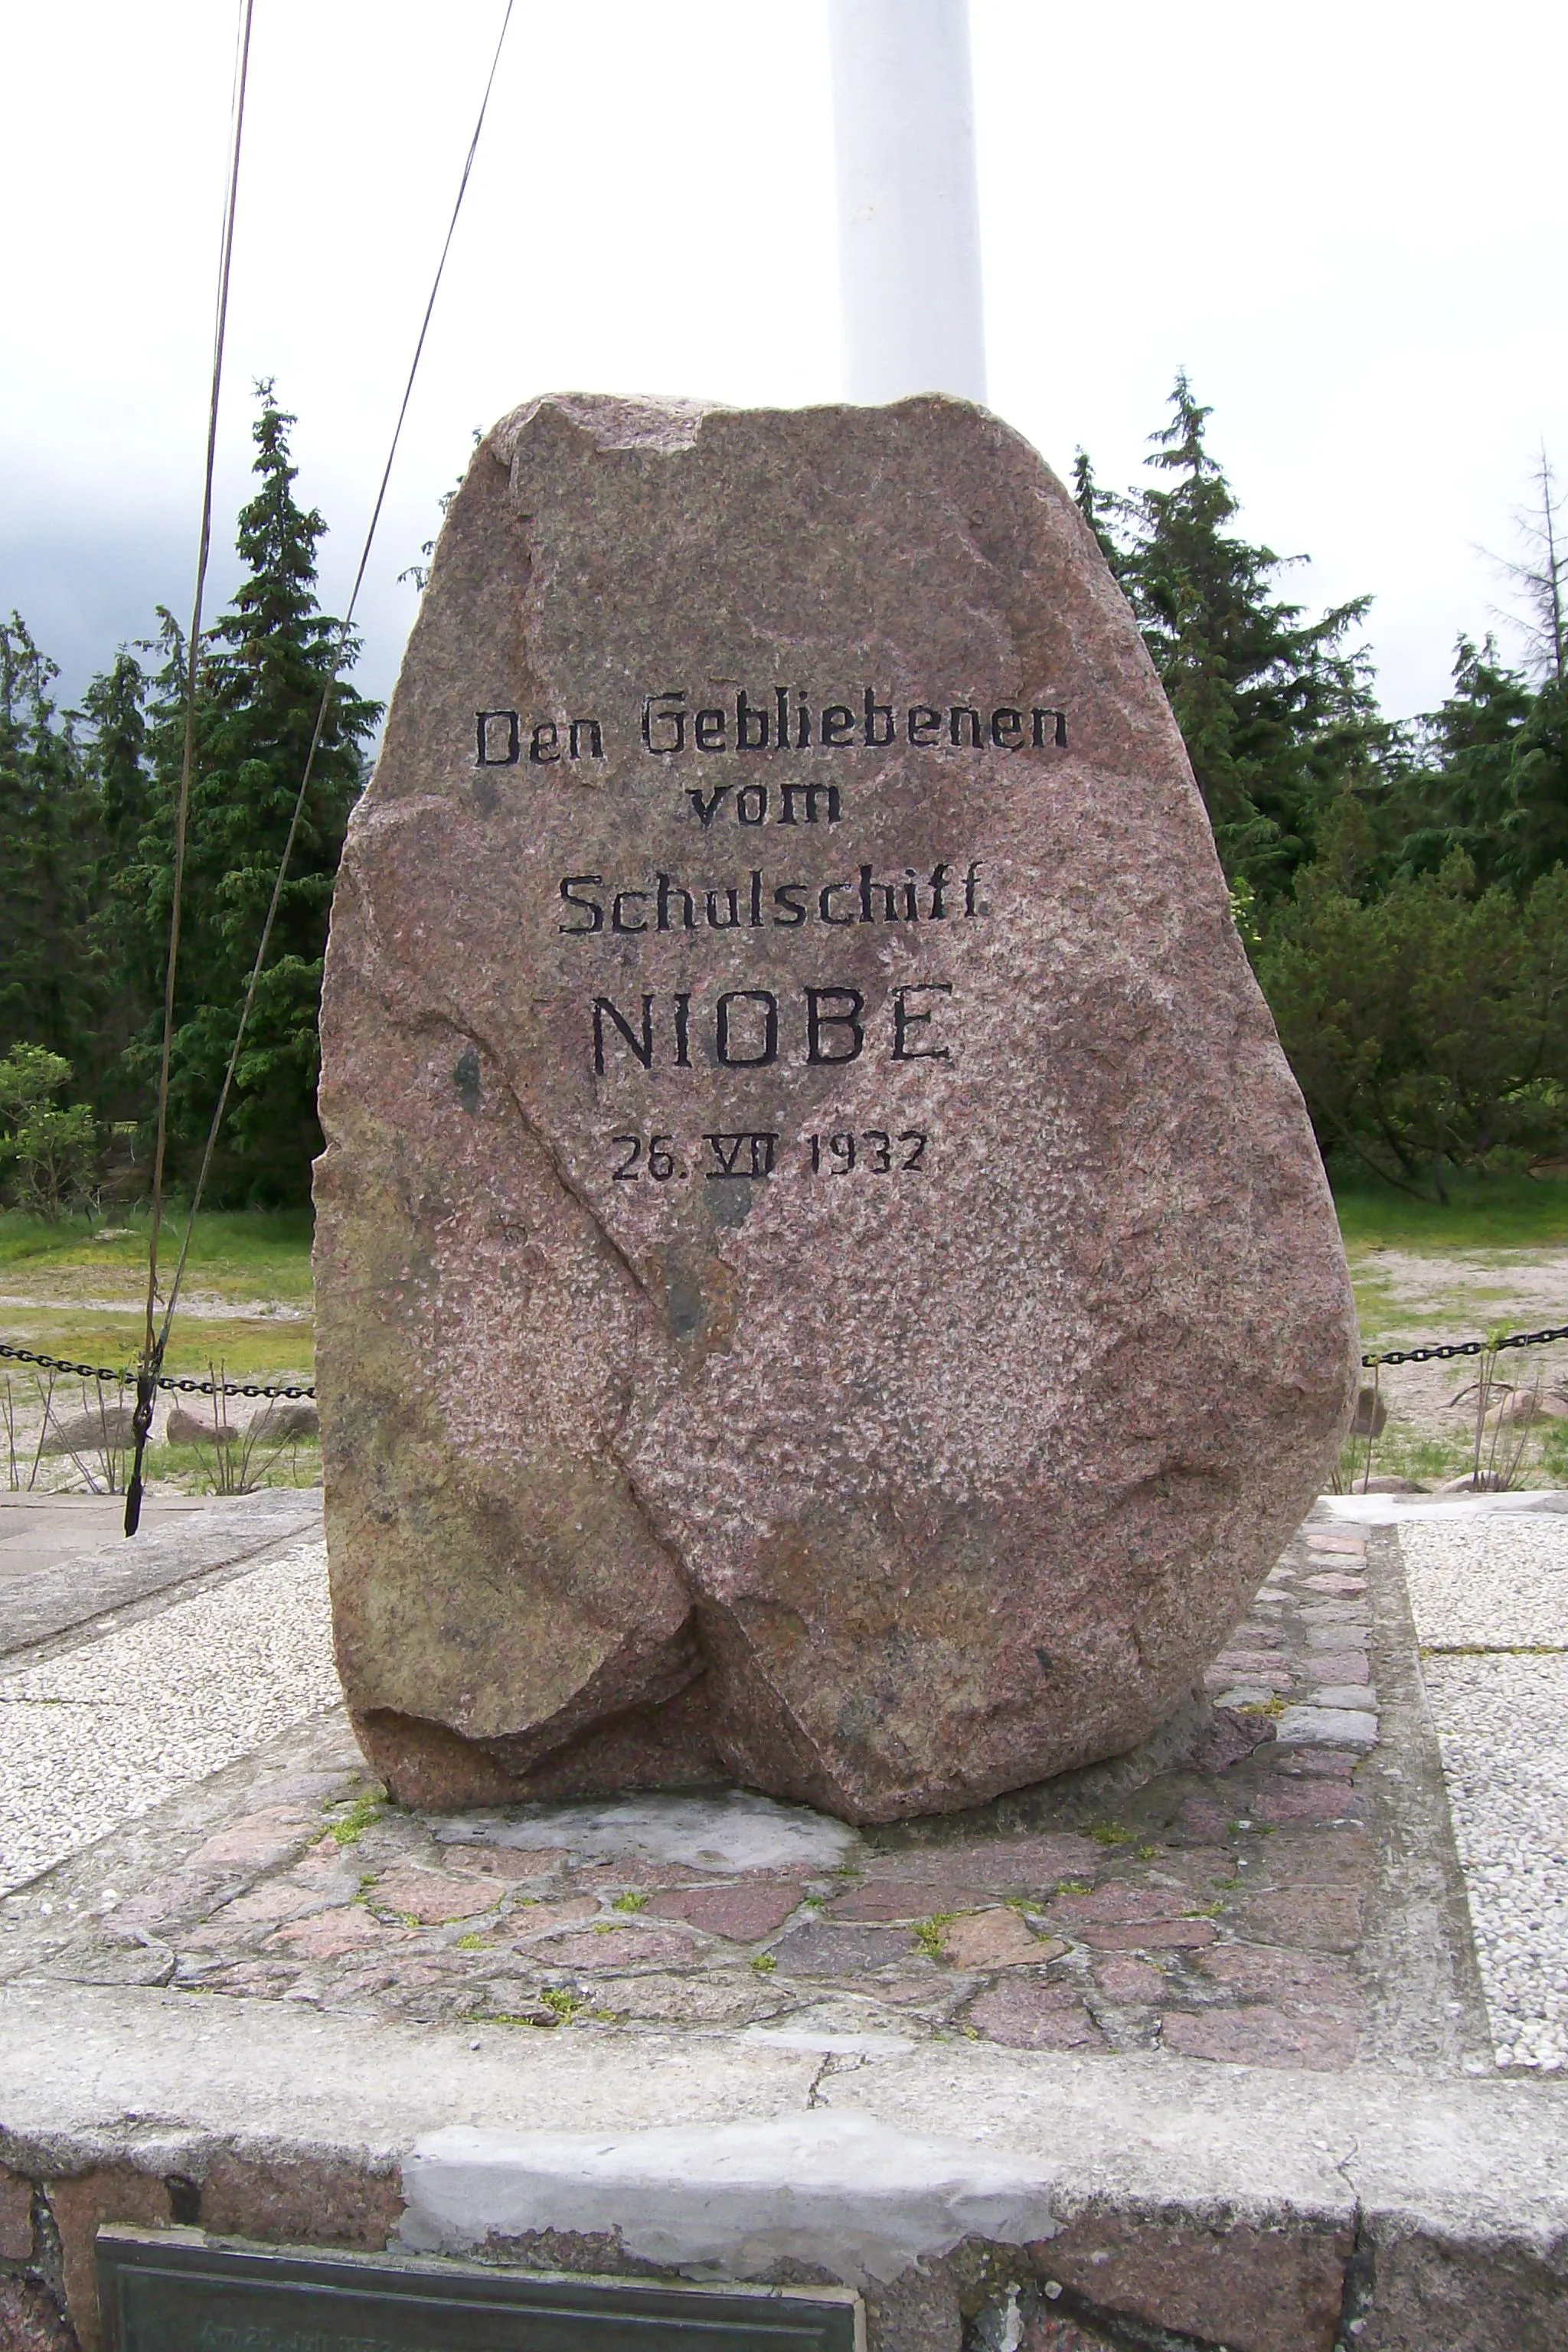 Photo showing: Niobe-Denkmal near Gammendorf, island Fehmarn, Schleswig-Holstein, Germany, to commemorate the loss of German Segelschulschiff Niobe in 1932